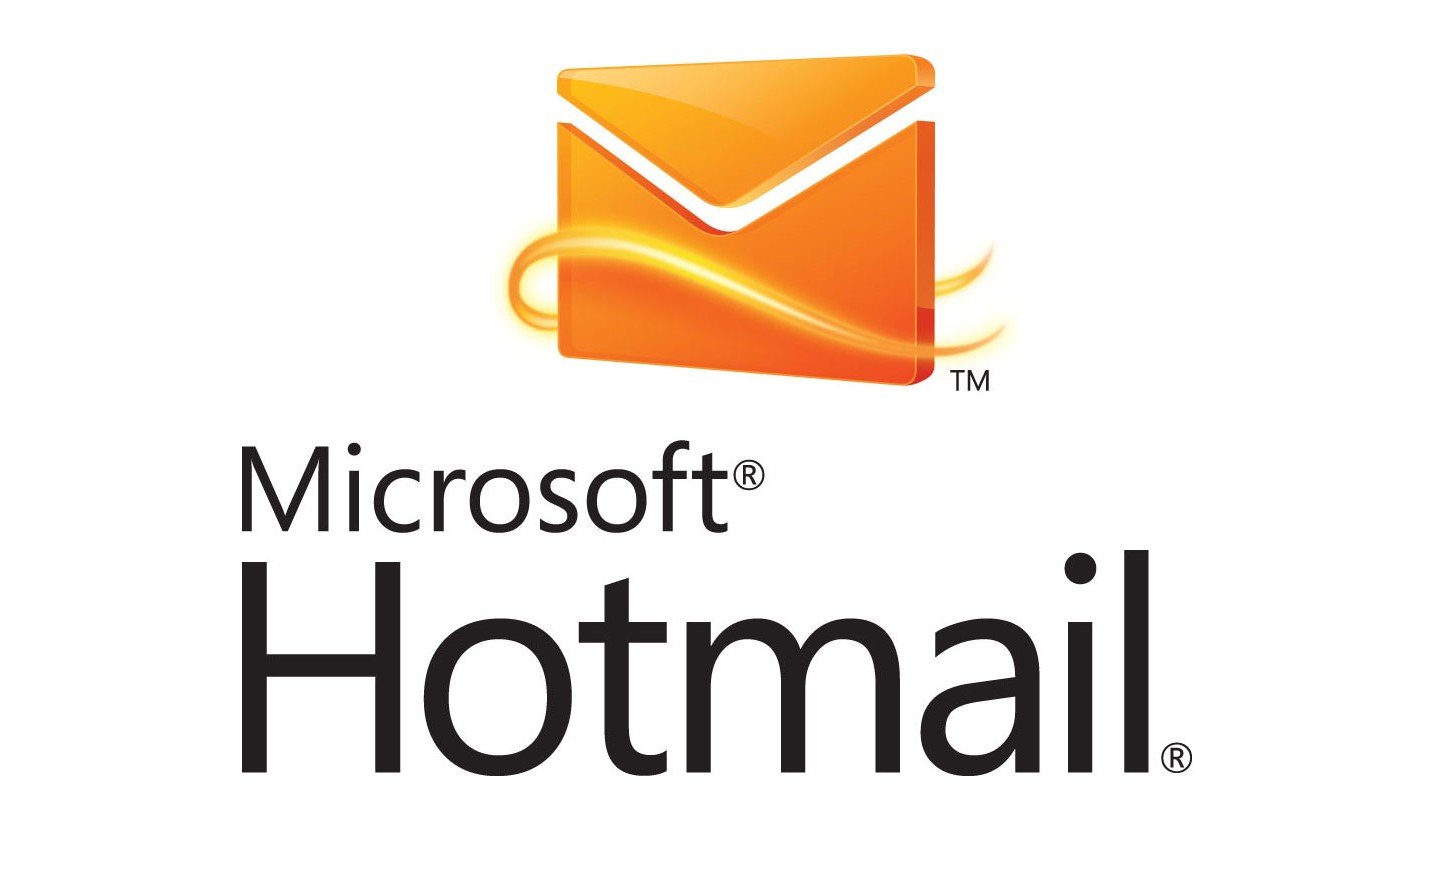 Hotmail Marketing Mix